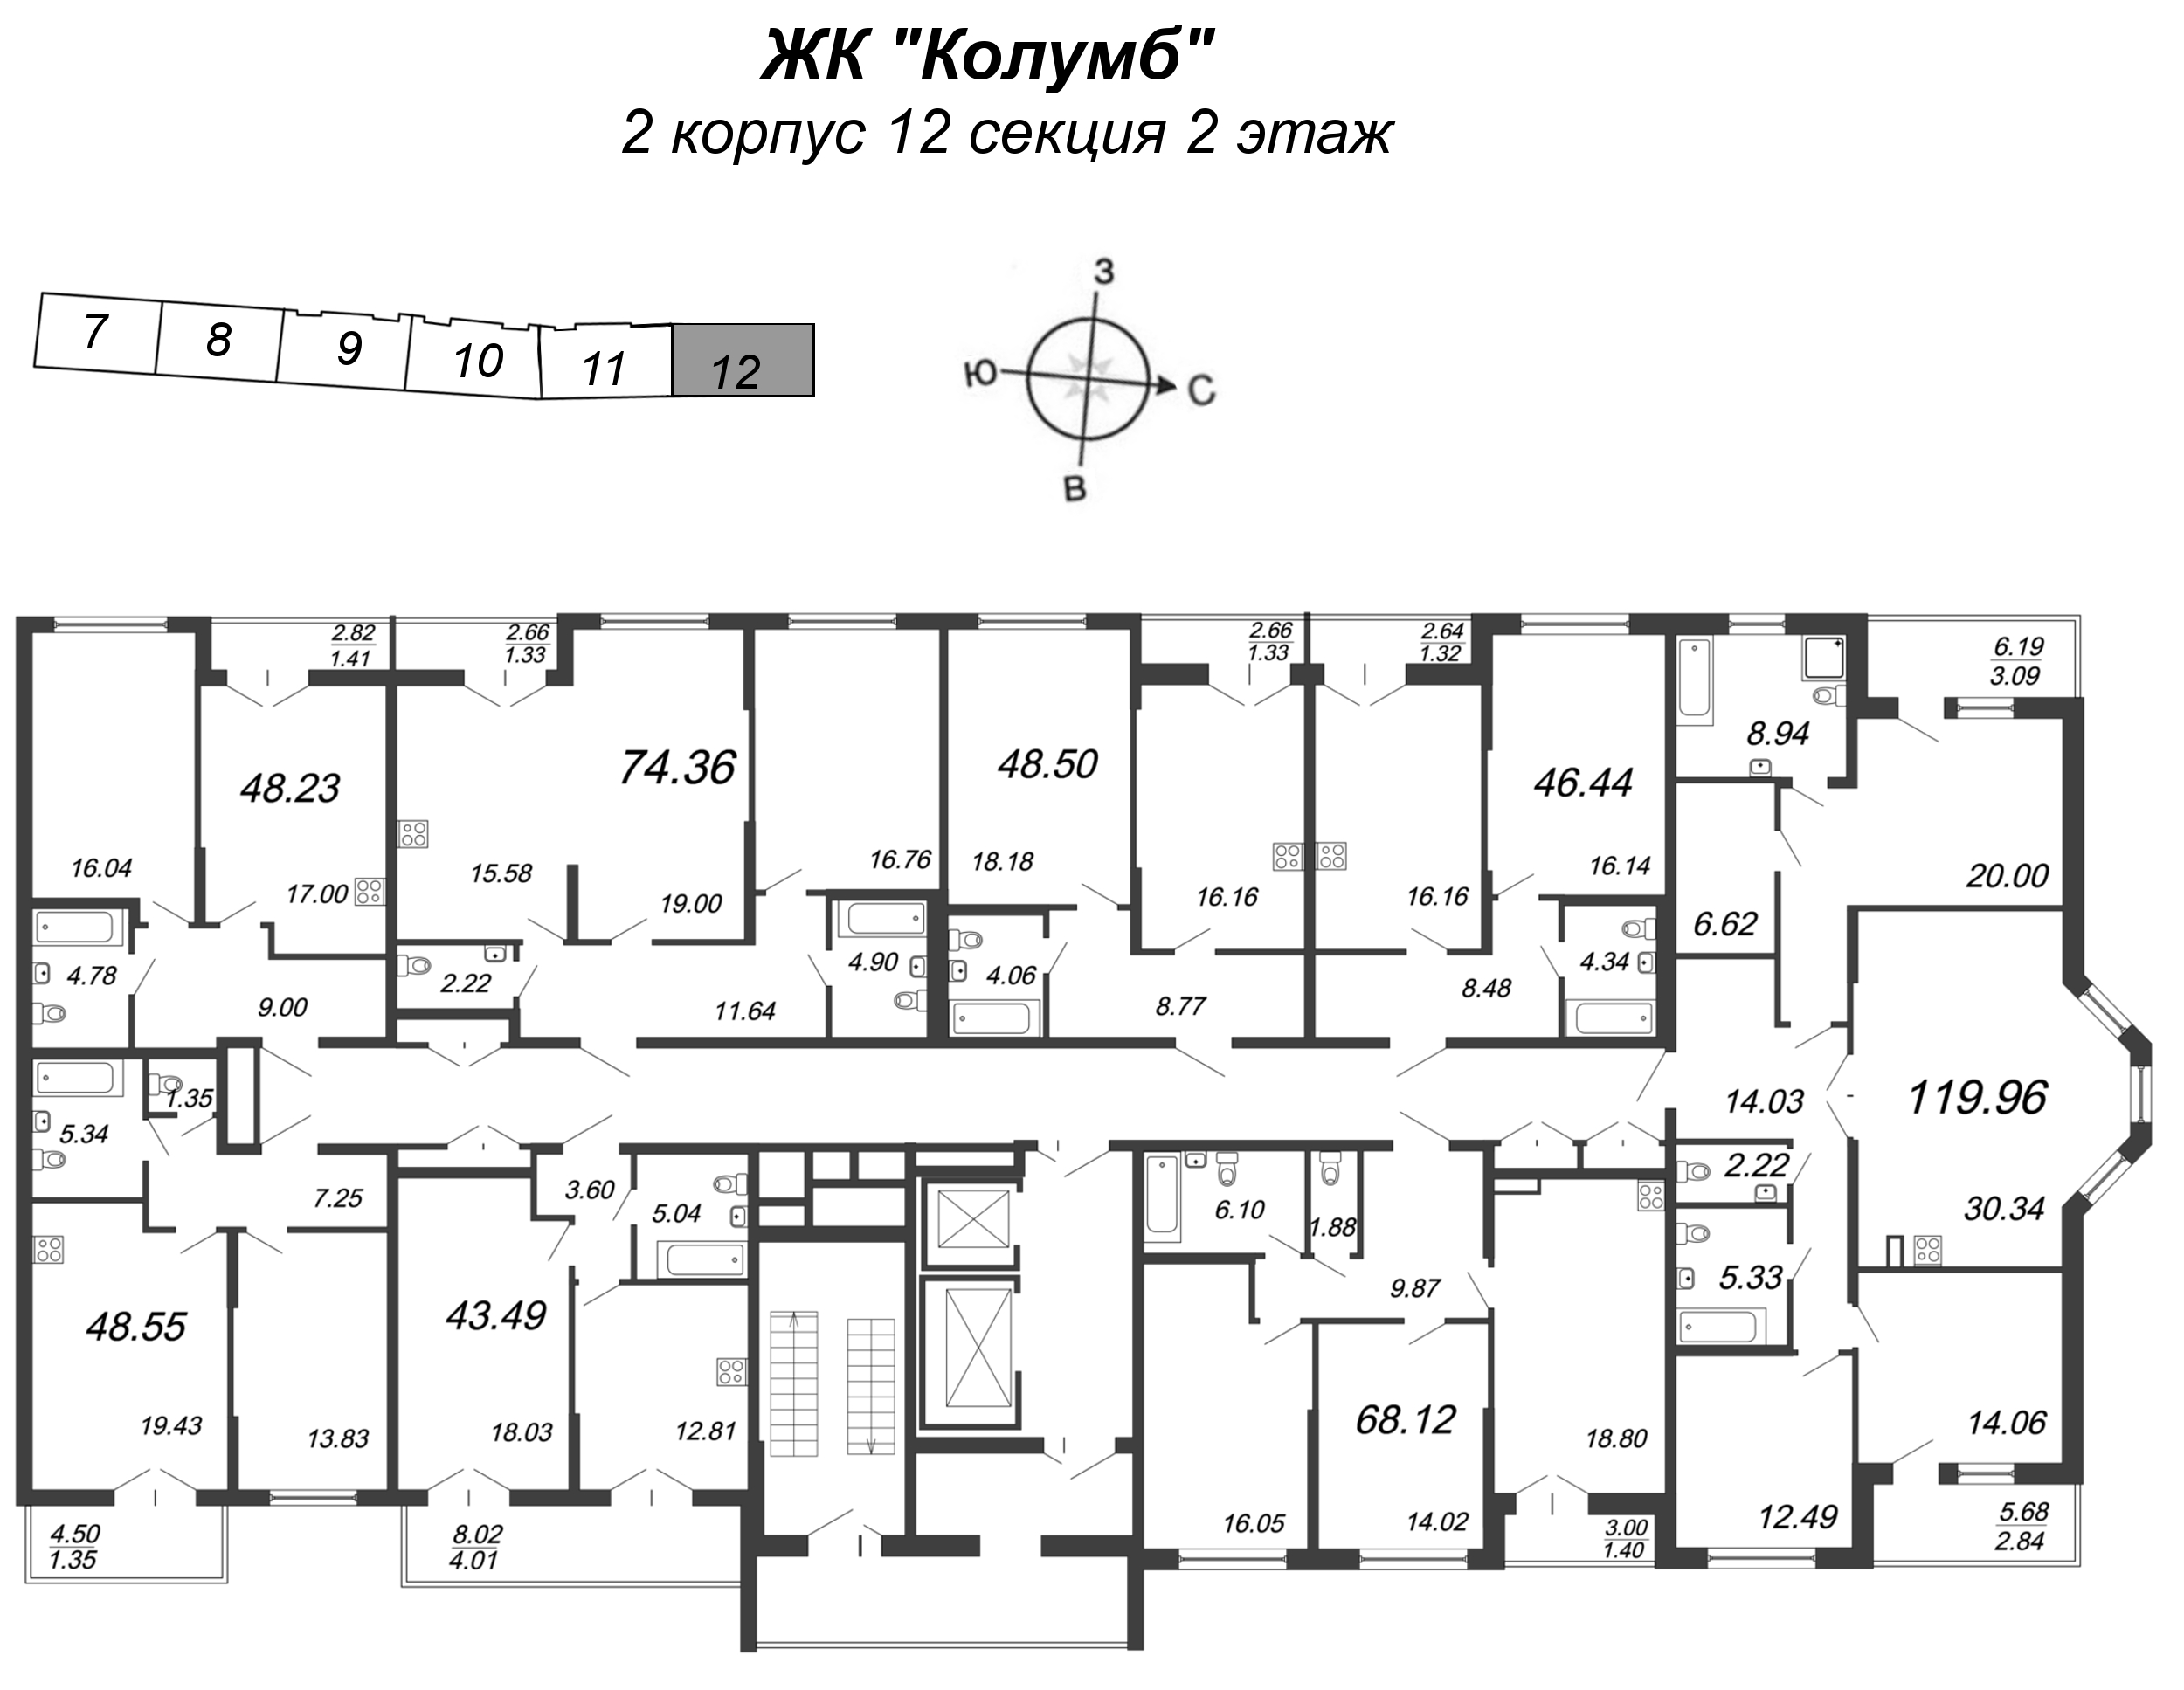 4-комнатная (Евро) квартира, 120.6 м² в ЖК "Колумб" - планировка этажа